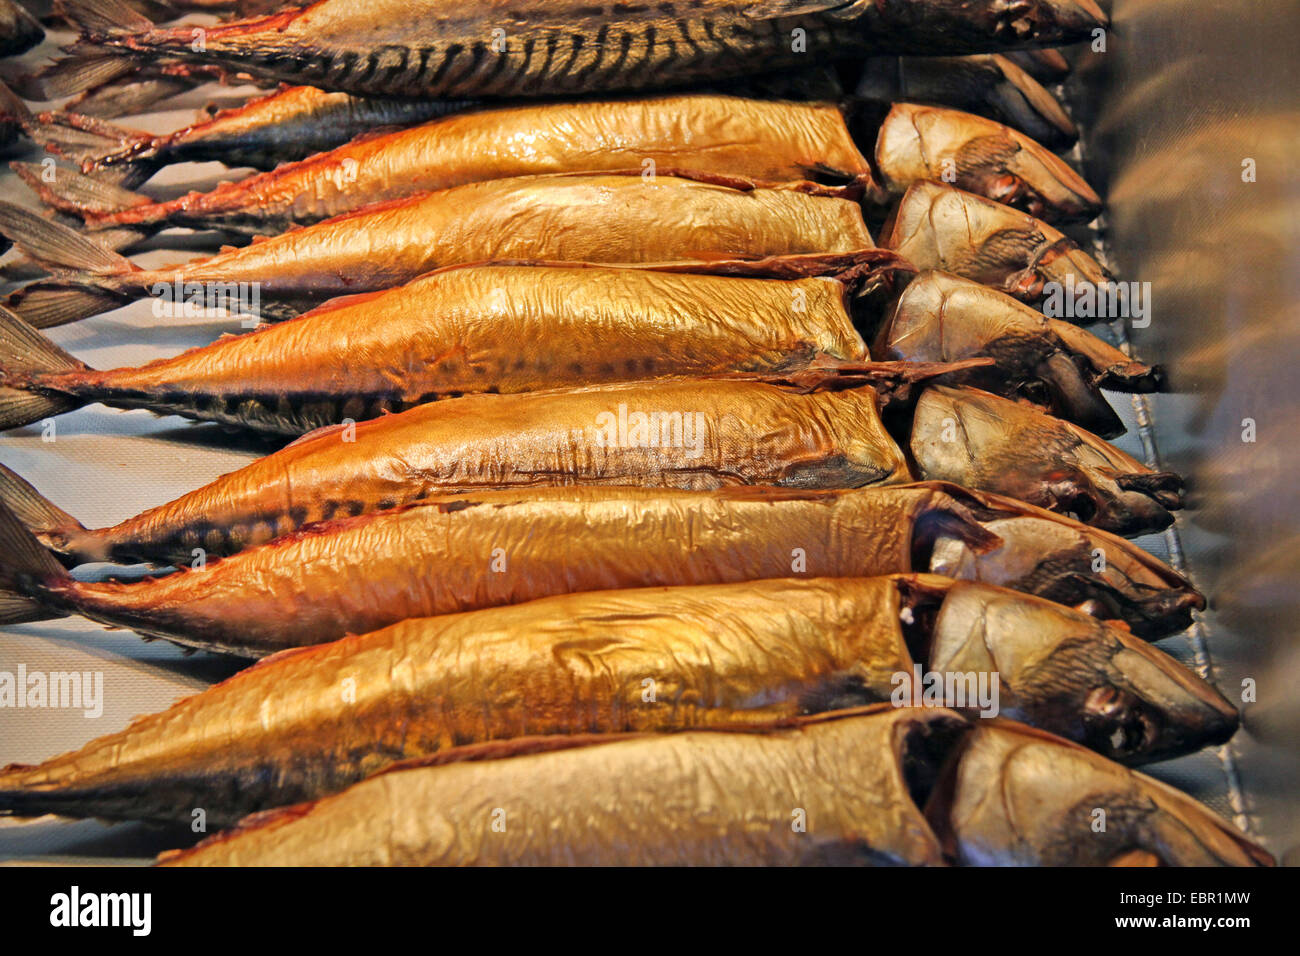 smoked mackerels on the weekly market, Germany Stock Photo